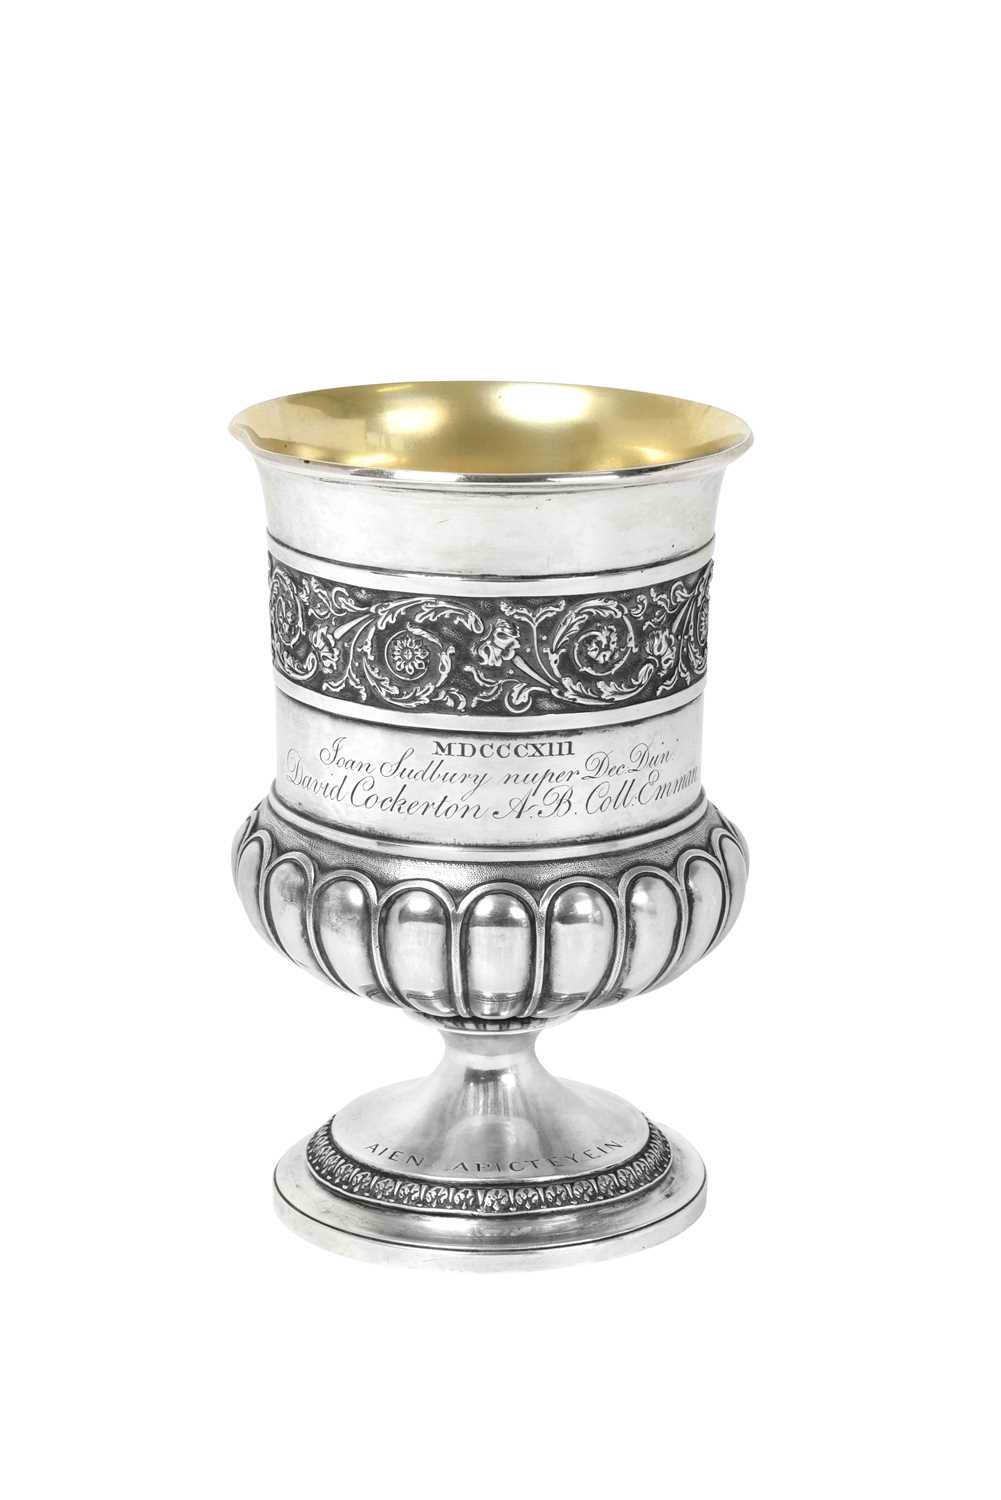 A George III Silver Goblet, by Rebecca Emes and Edward Barnard, London, 1811